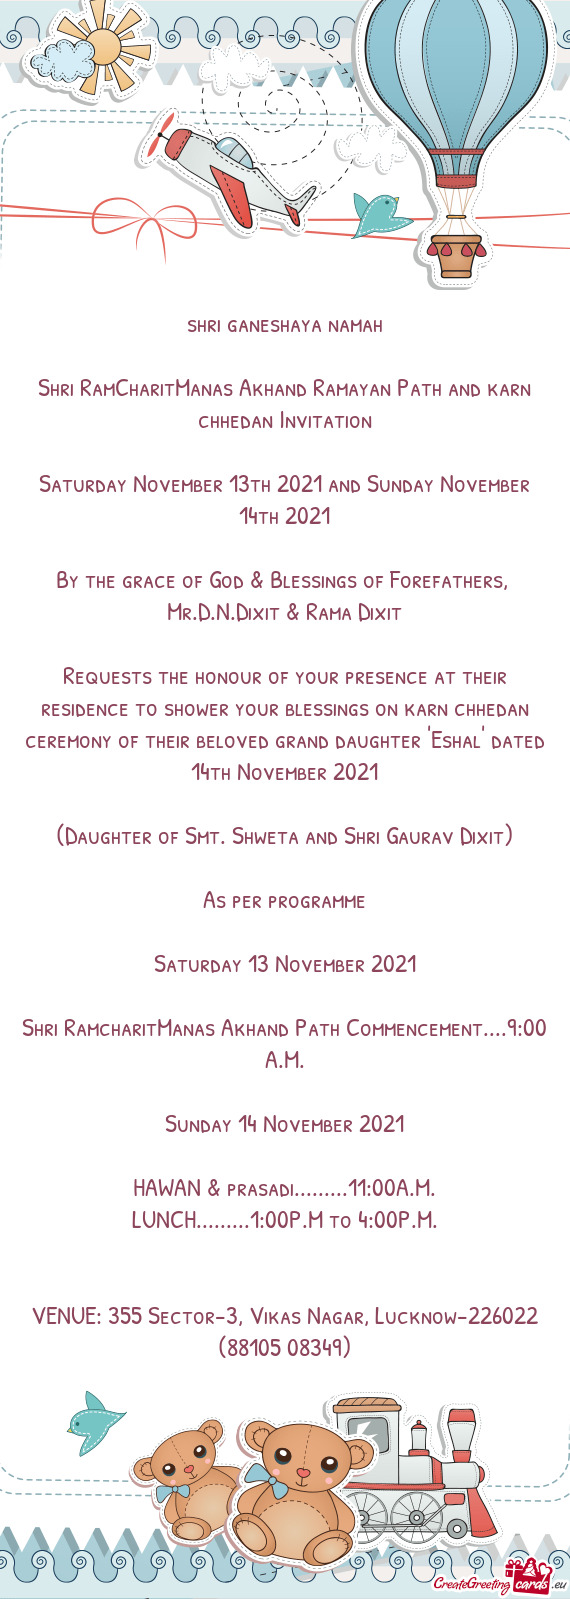 Shri RamCharitManas Akhand Ramayan Path and karn chhedan Invitation